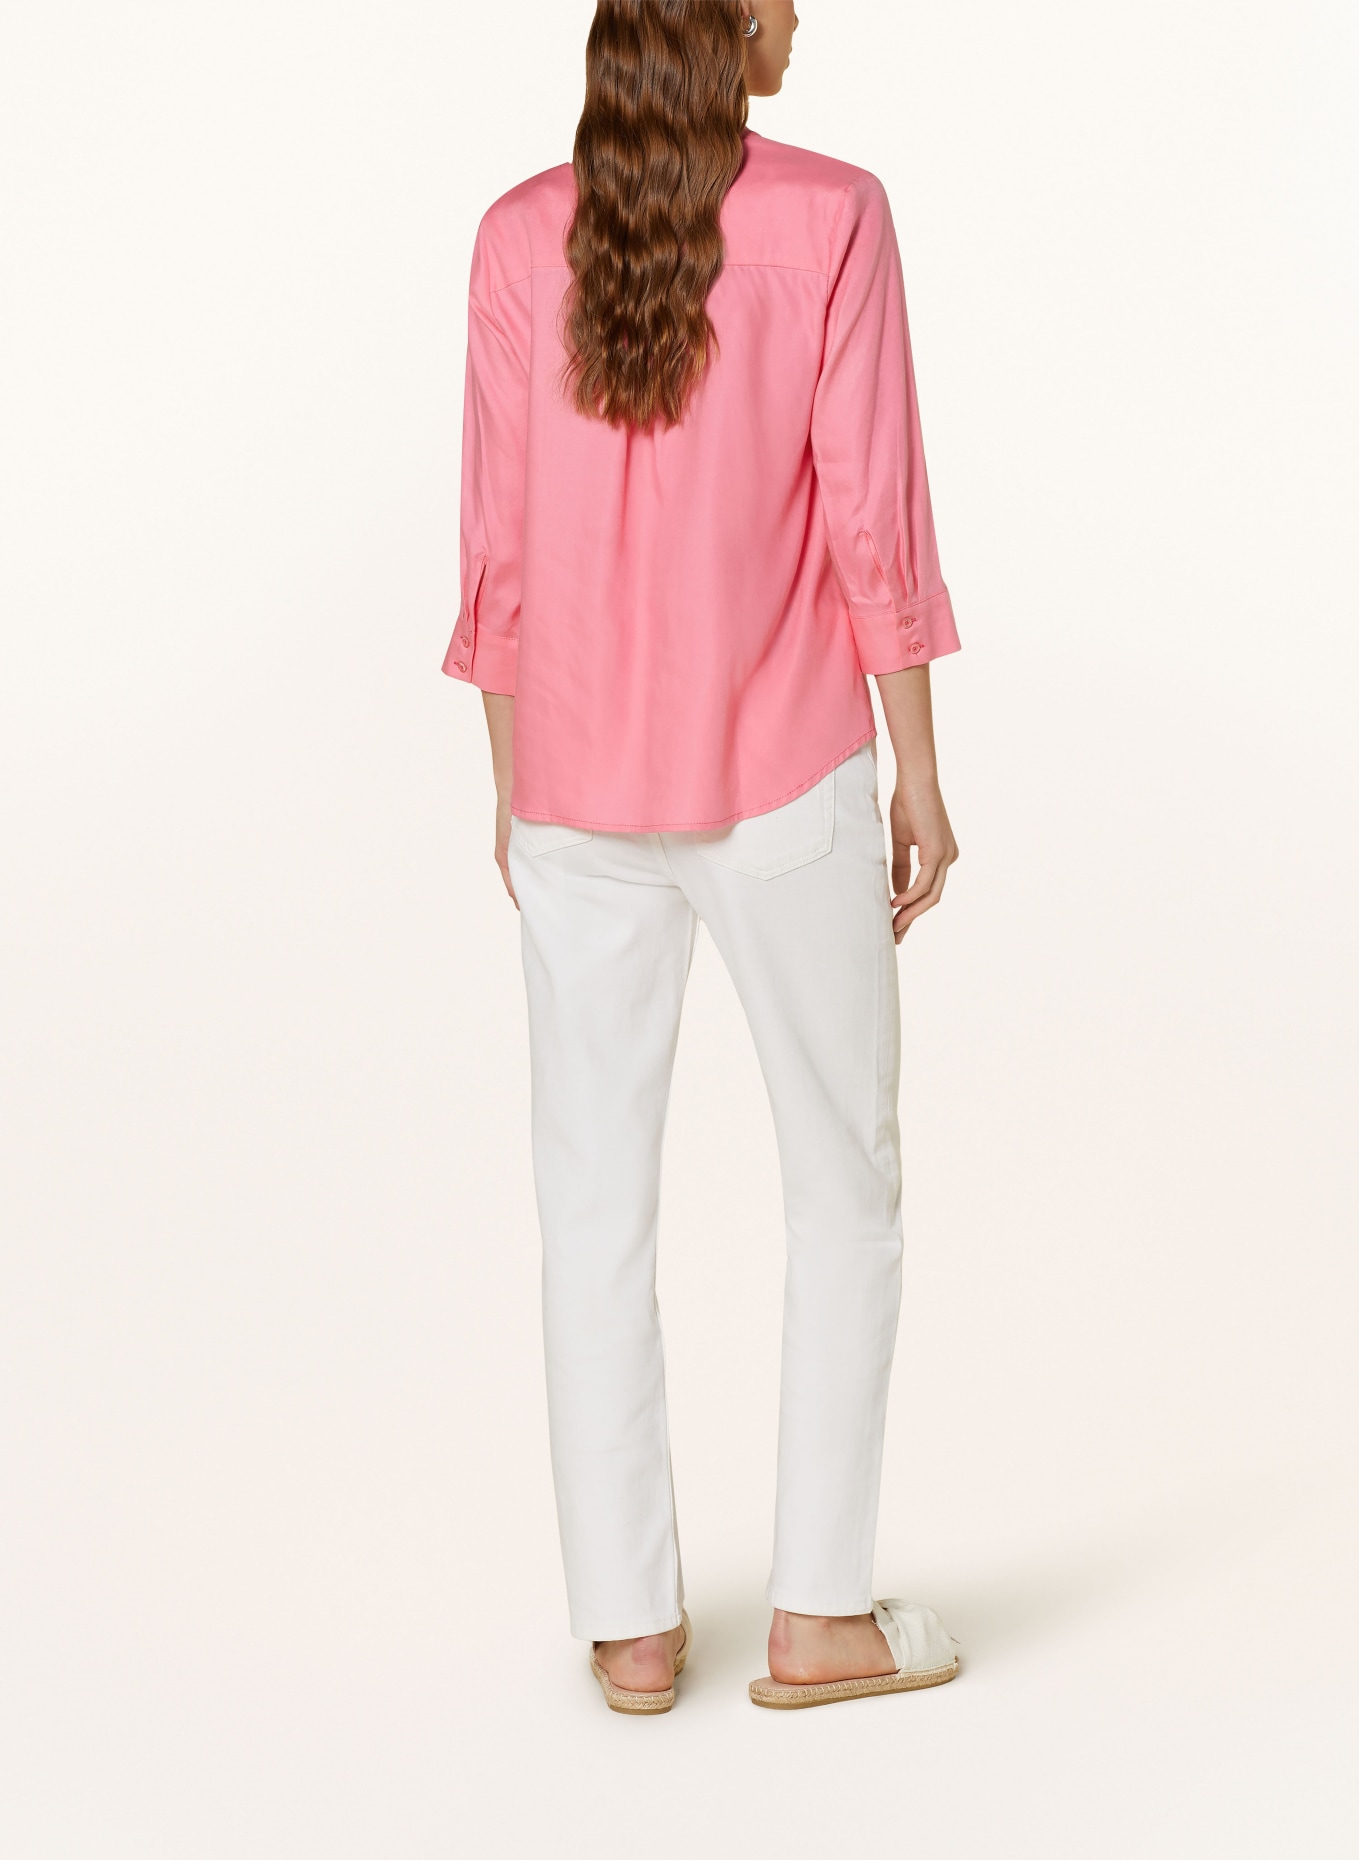 MORE & MORE Bluse mit 3/4-Arm, Farbe: 0835 sorbet pink (Bild 3)